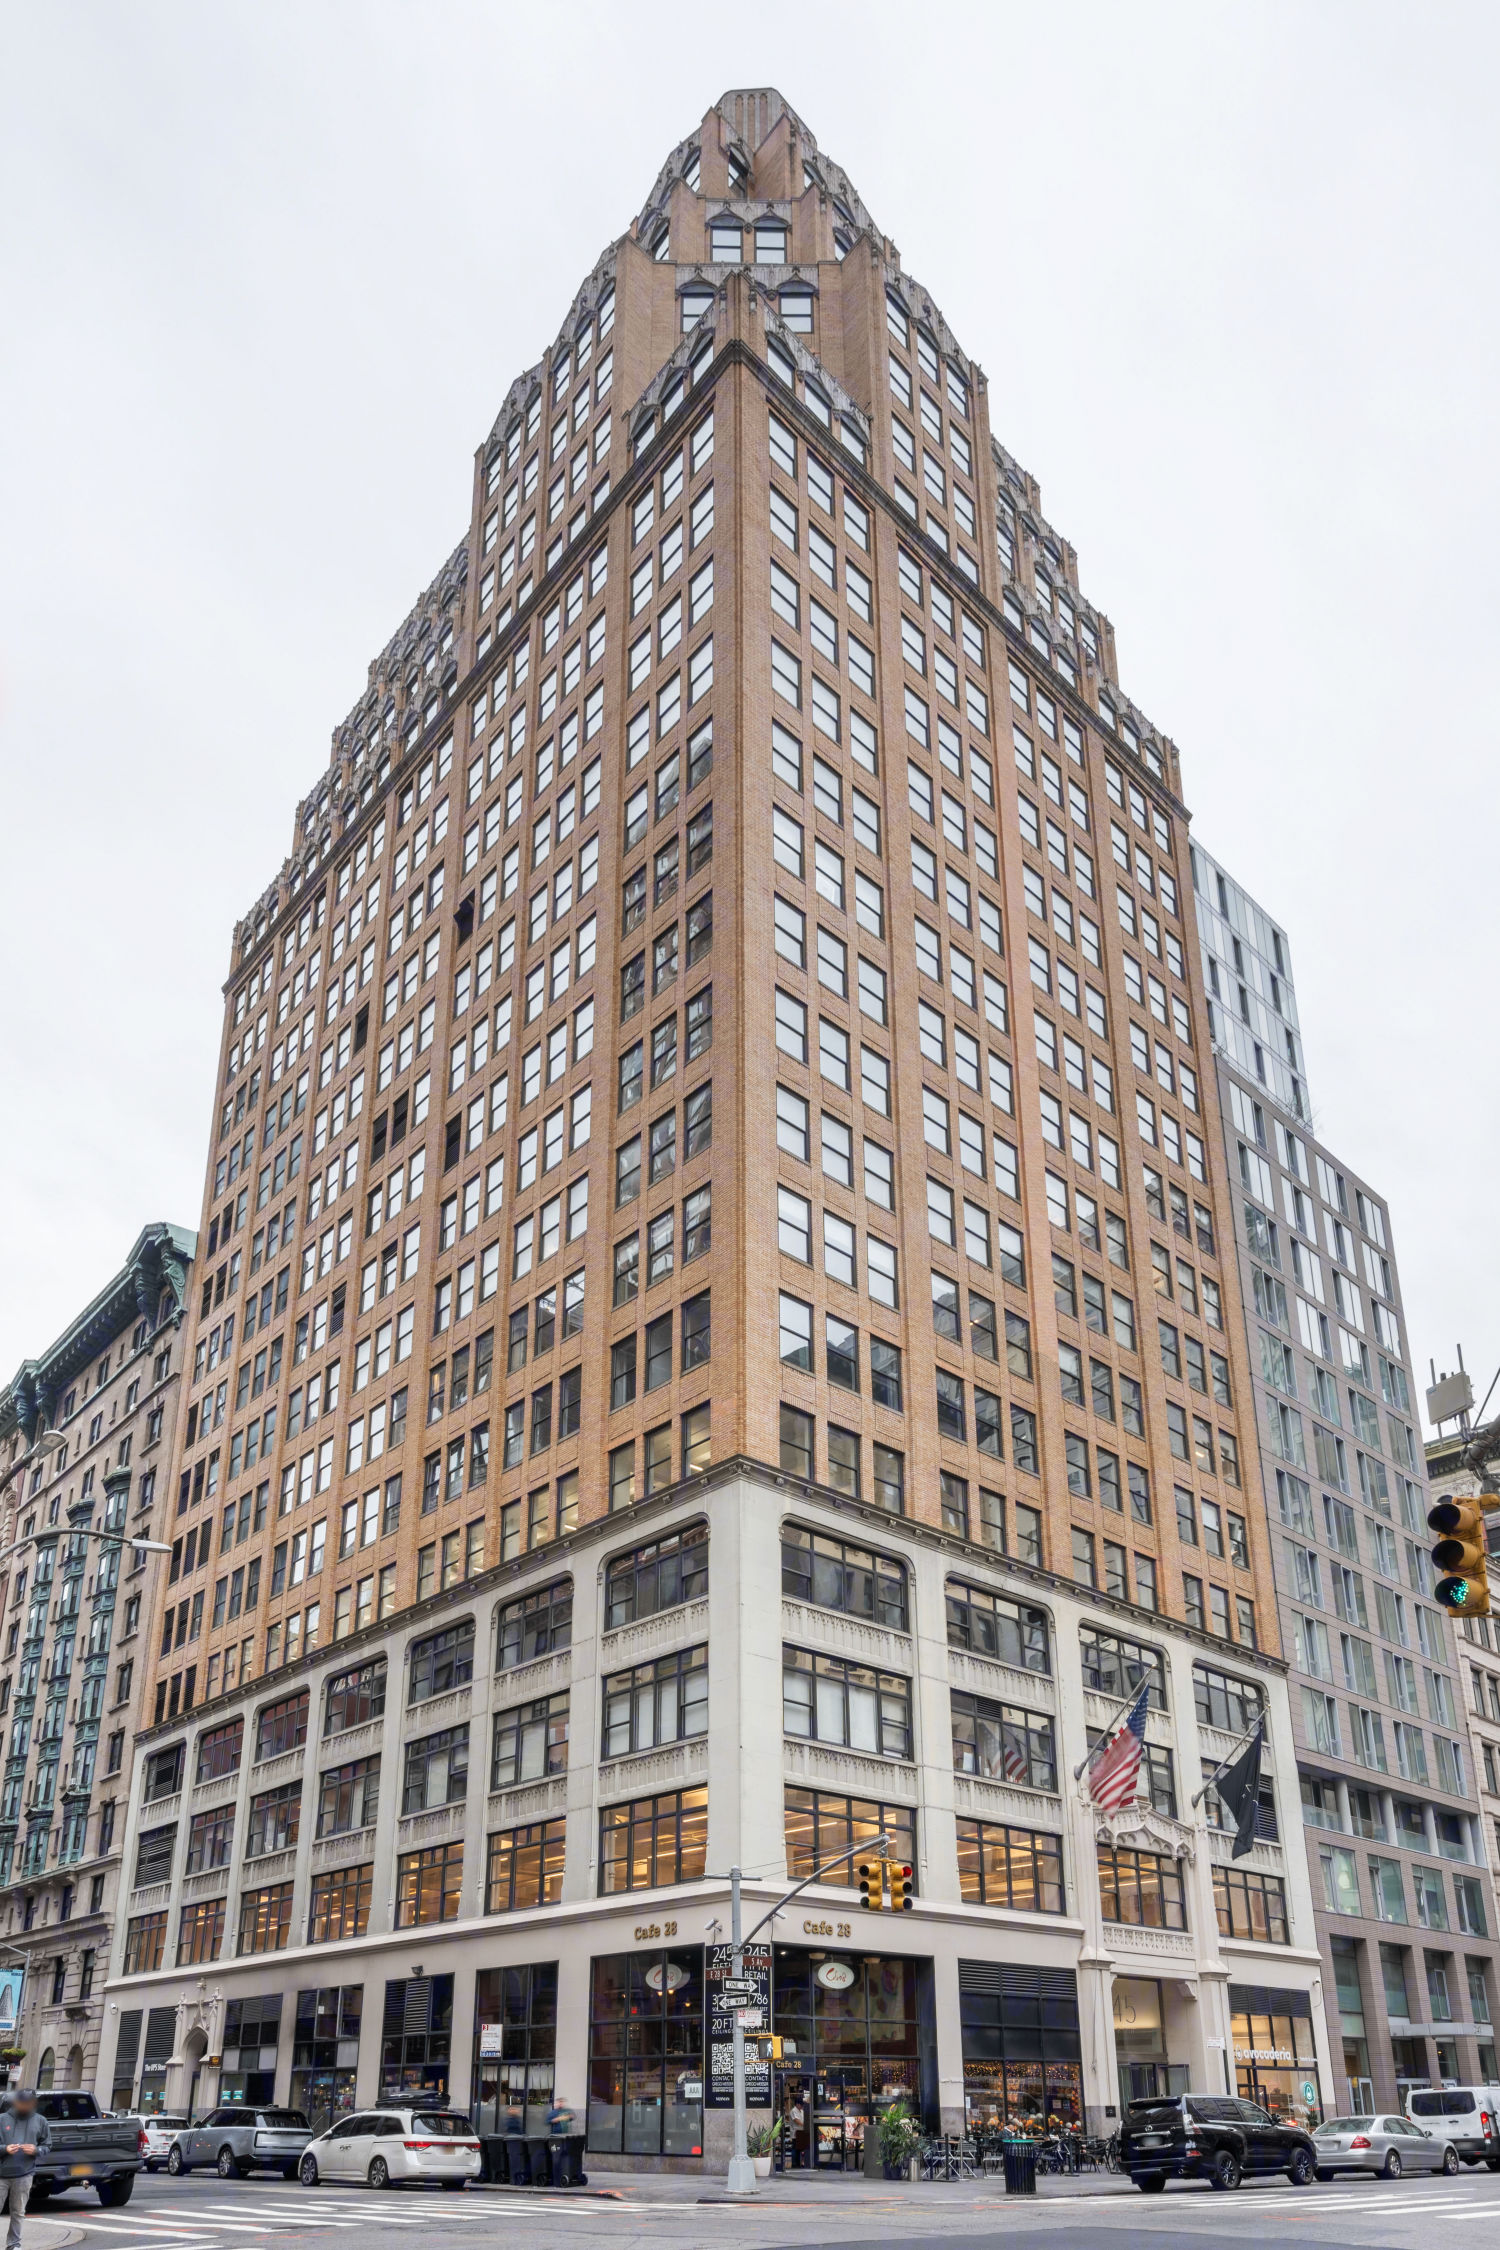 Saks Fifth Avenue's Midtown building could get luxury condos